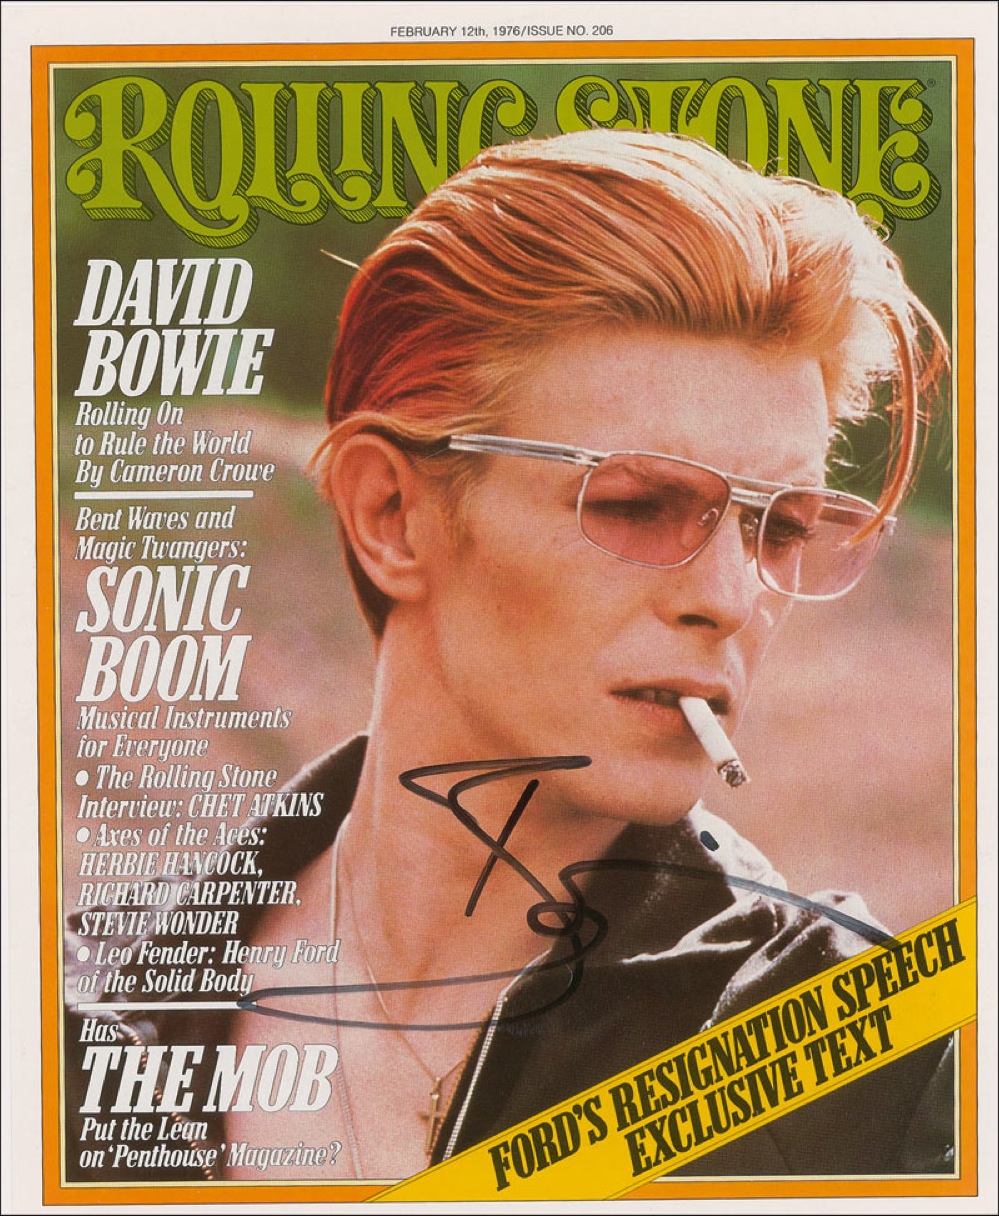 Lot #759 David Bowie